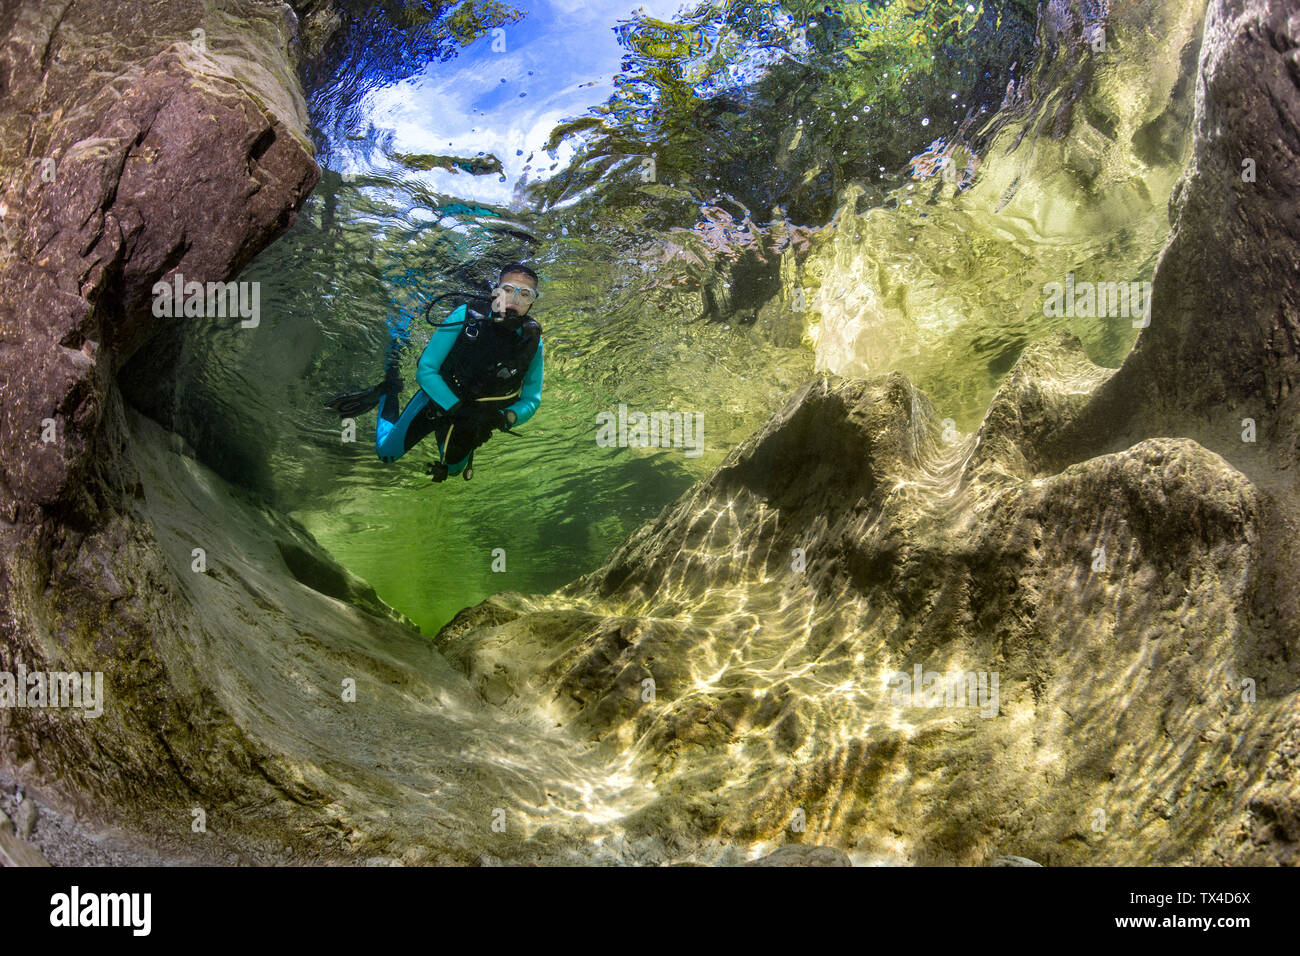 Austria, Salzkammergut, river Weissenbach, female scuba diver in a wild mountain river Stock Photo